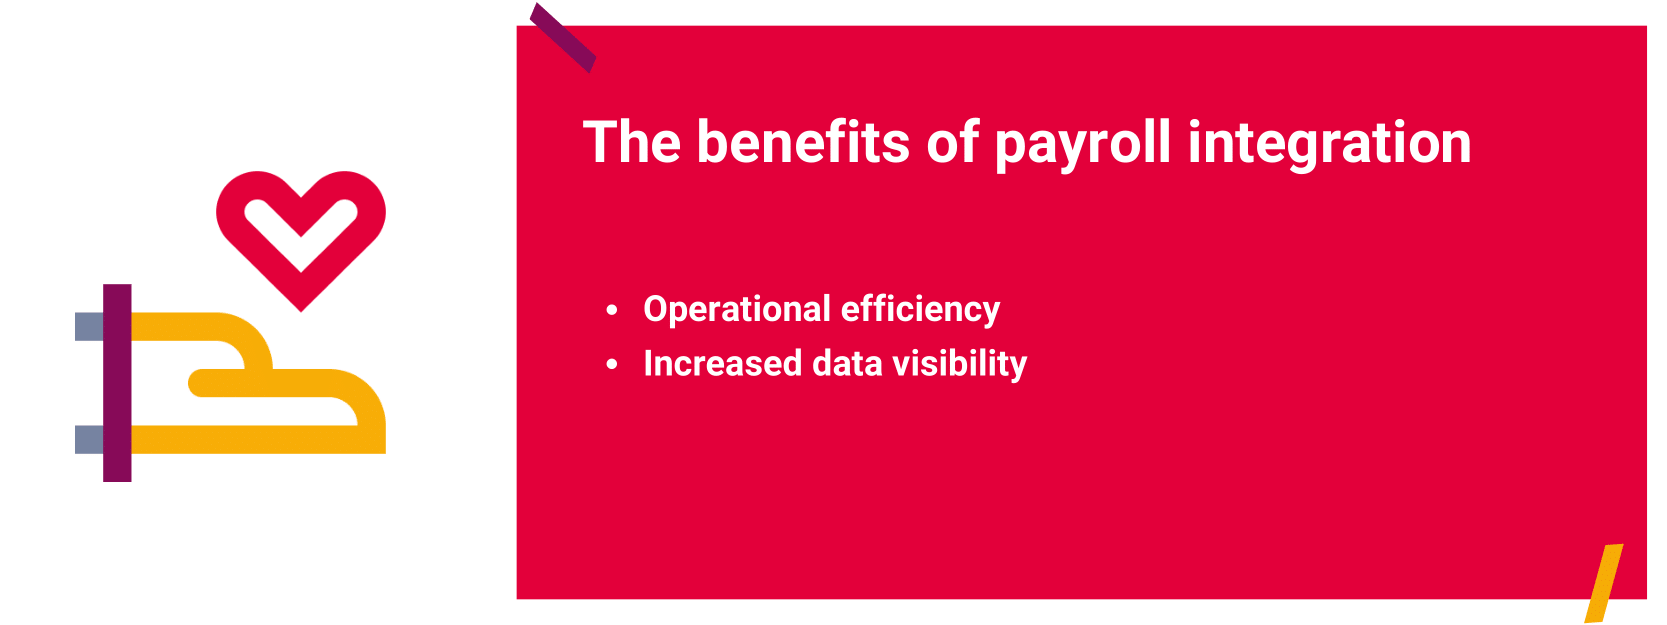 benefits of payroll integration